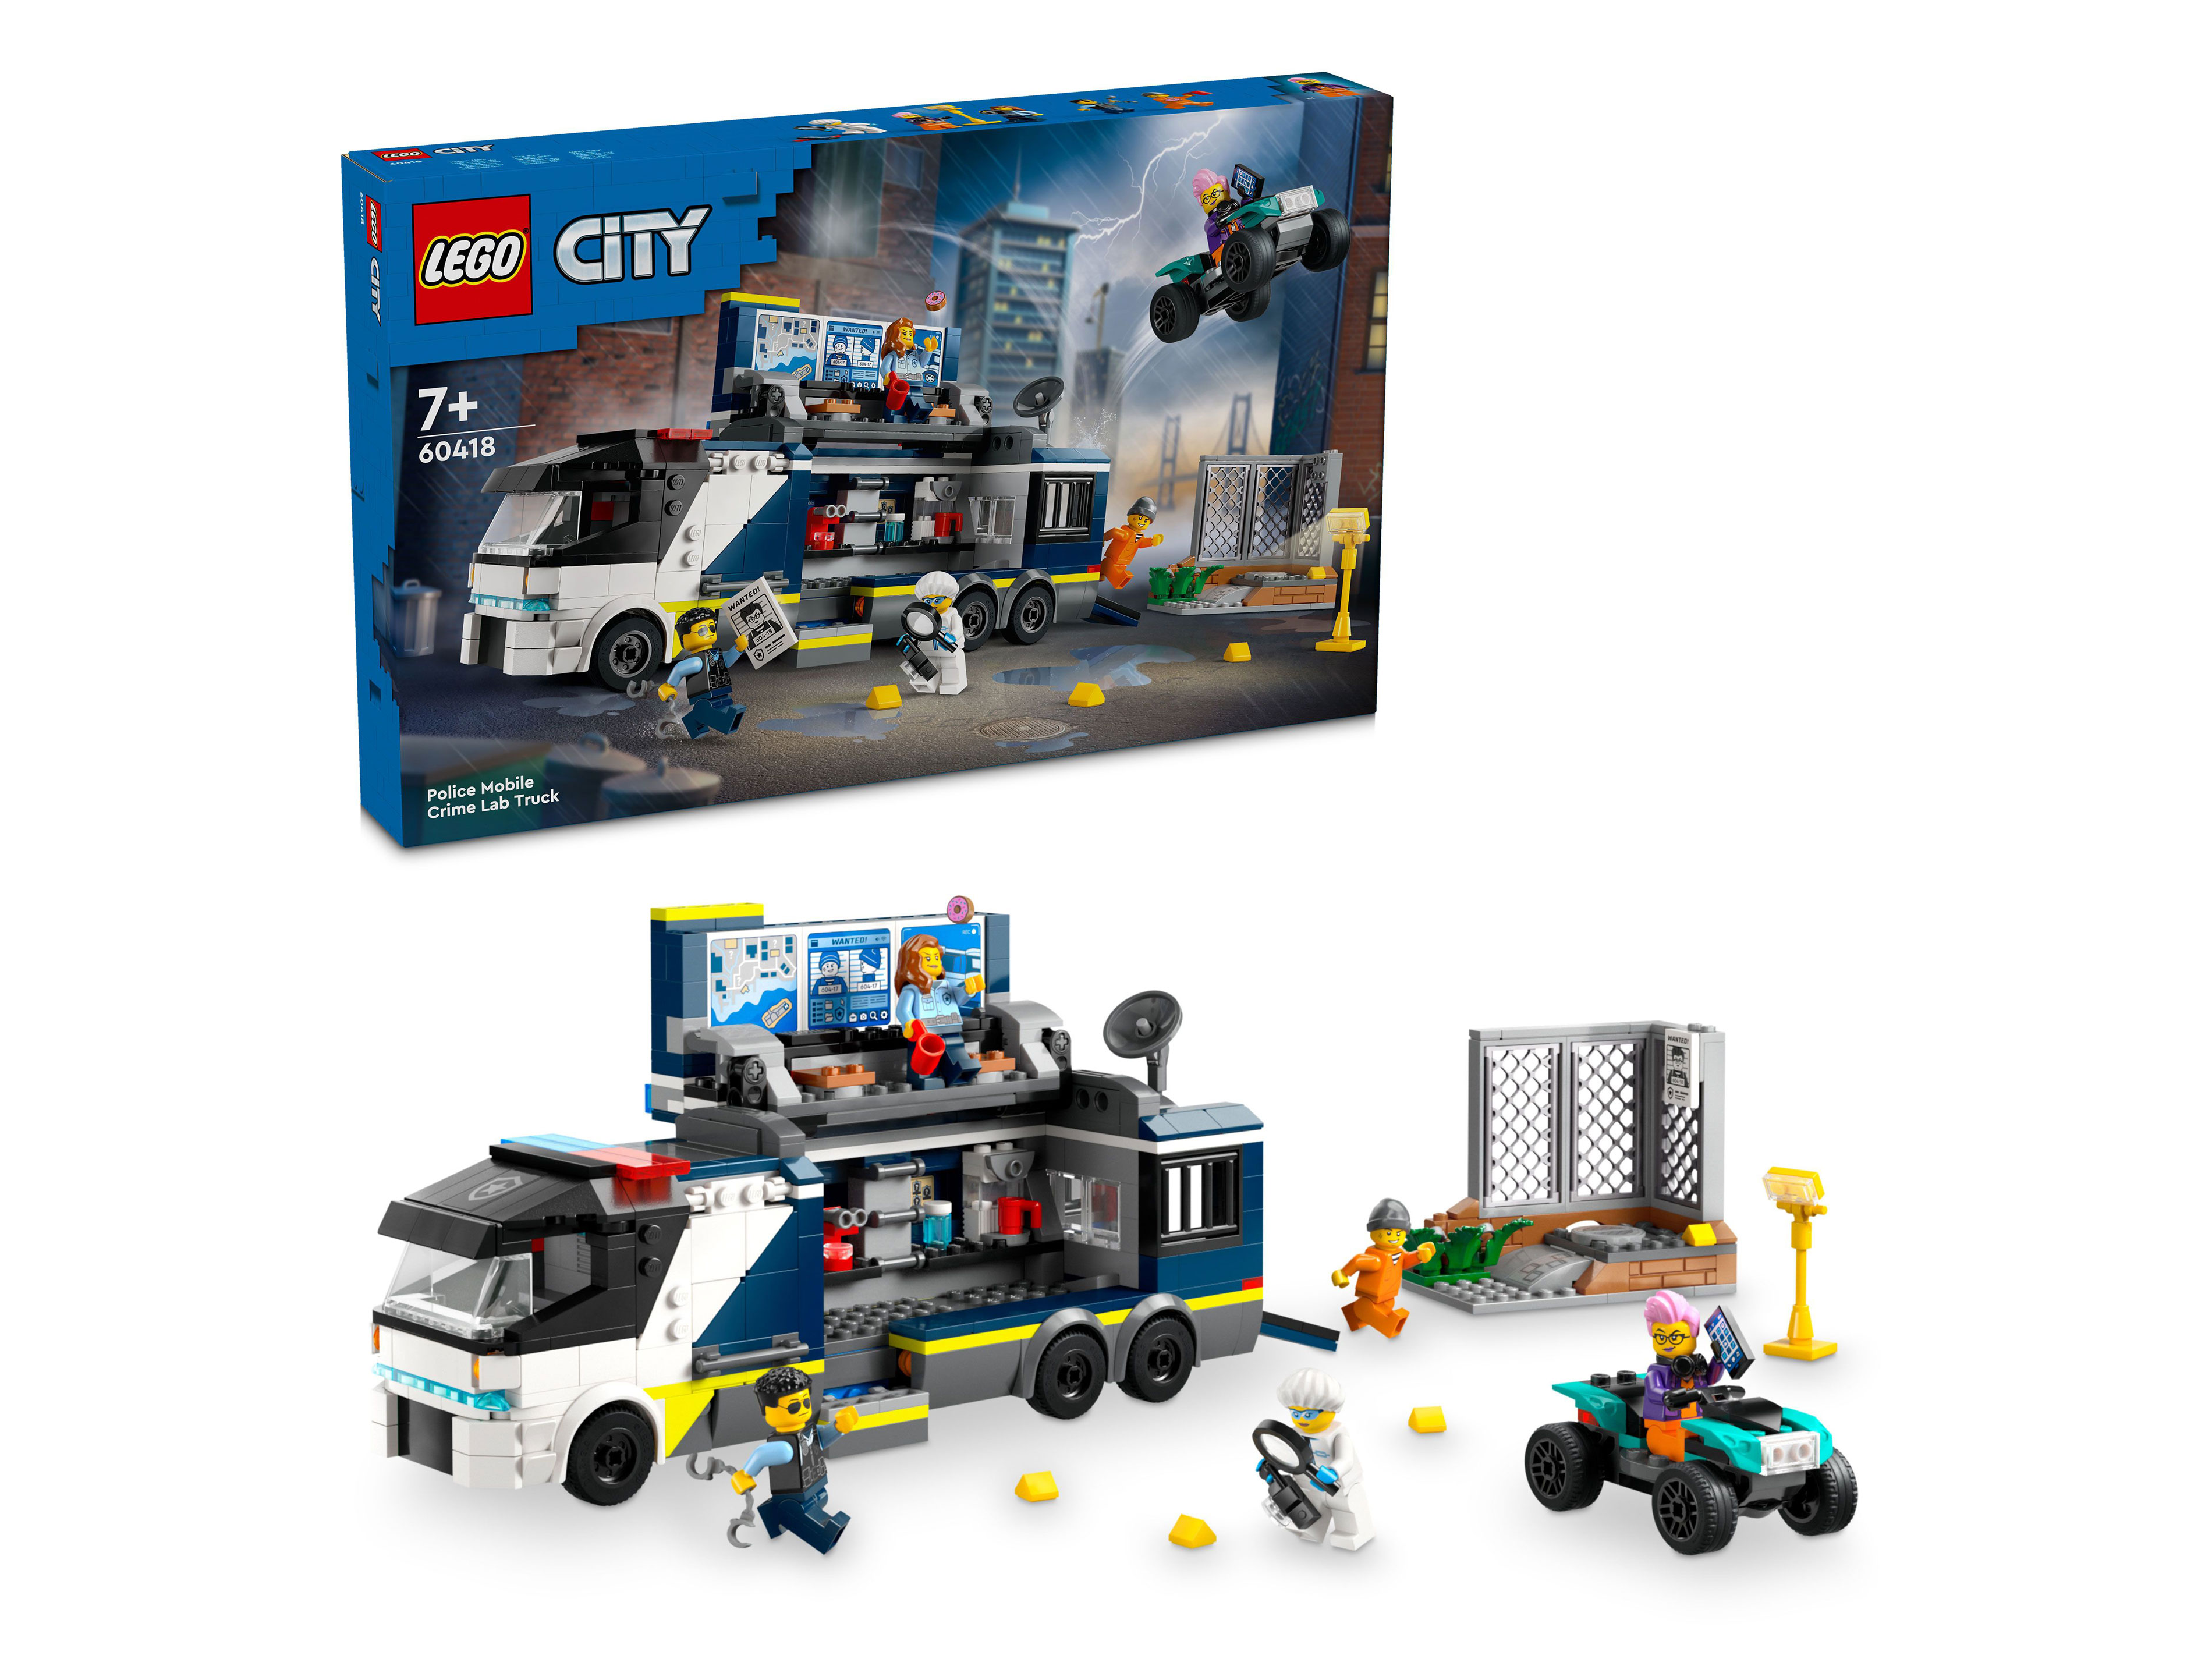 60351 Lego City Rocket Launch Center – Brickinbad